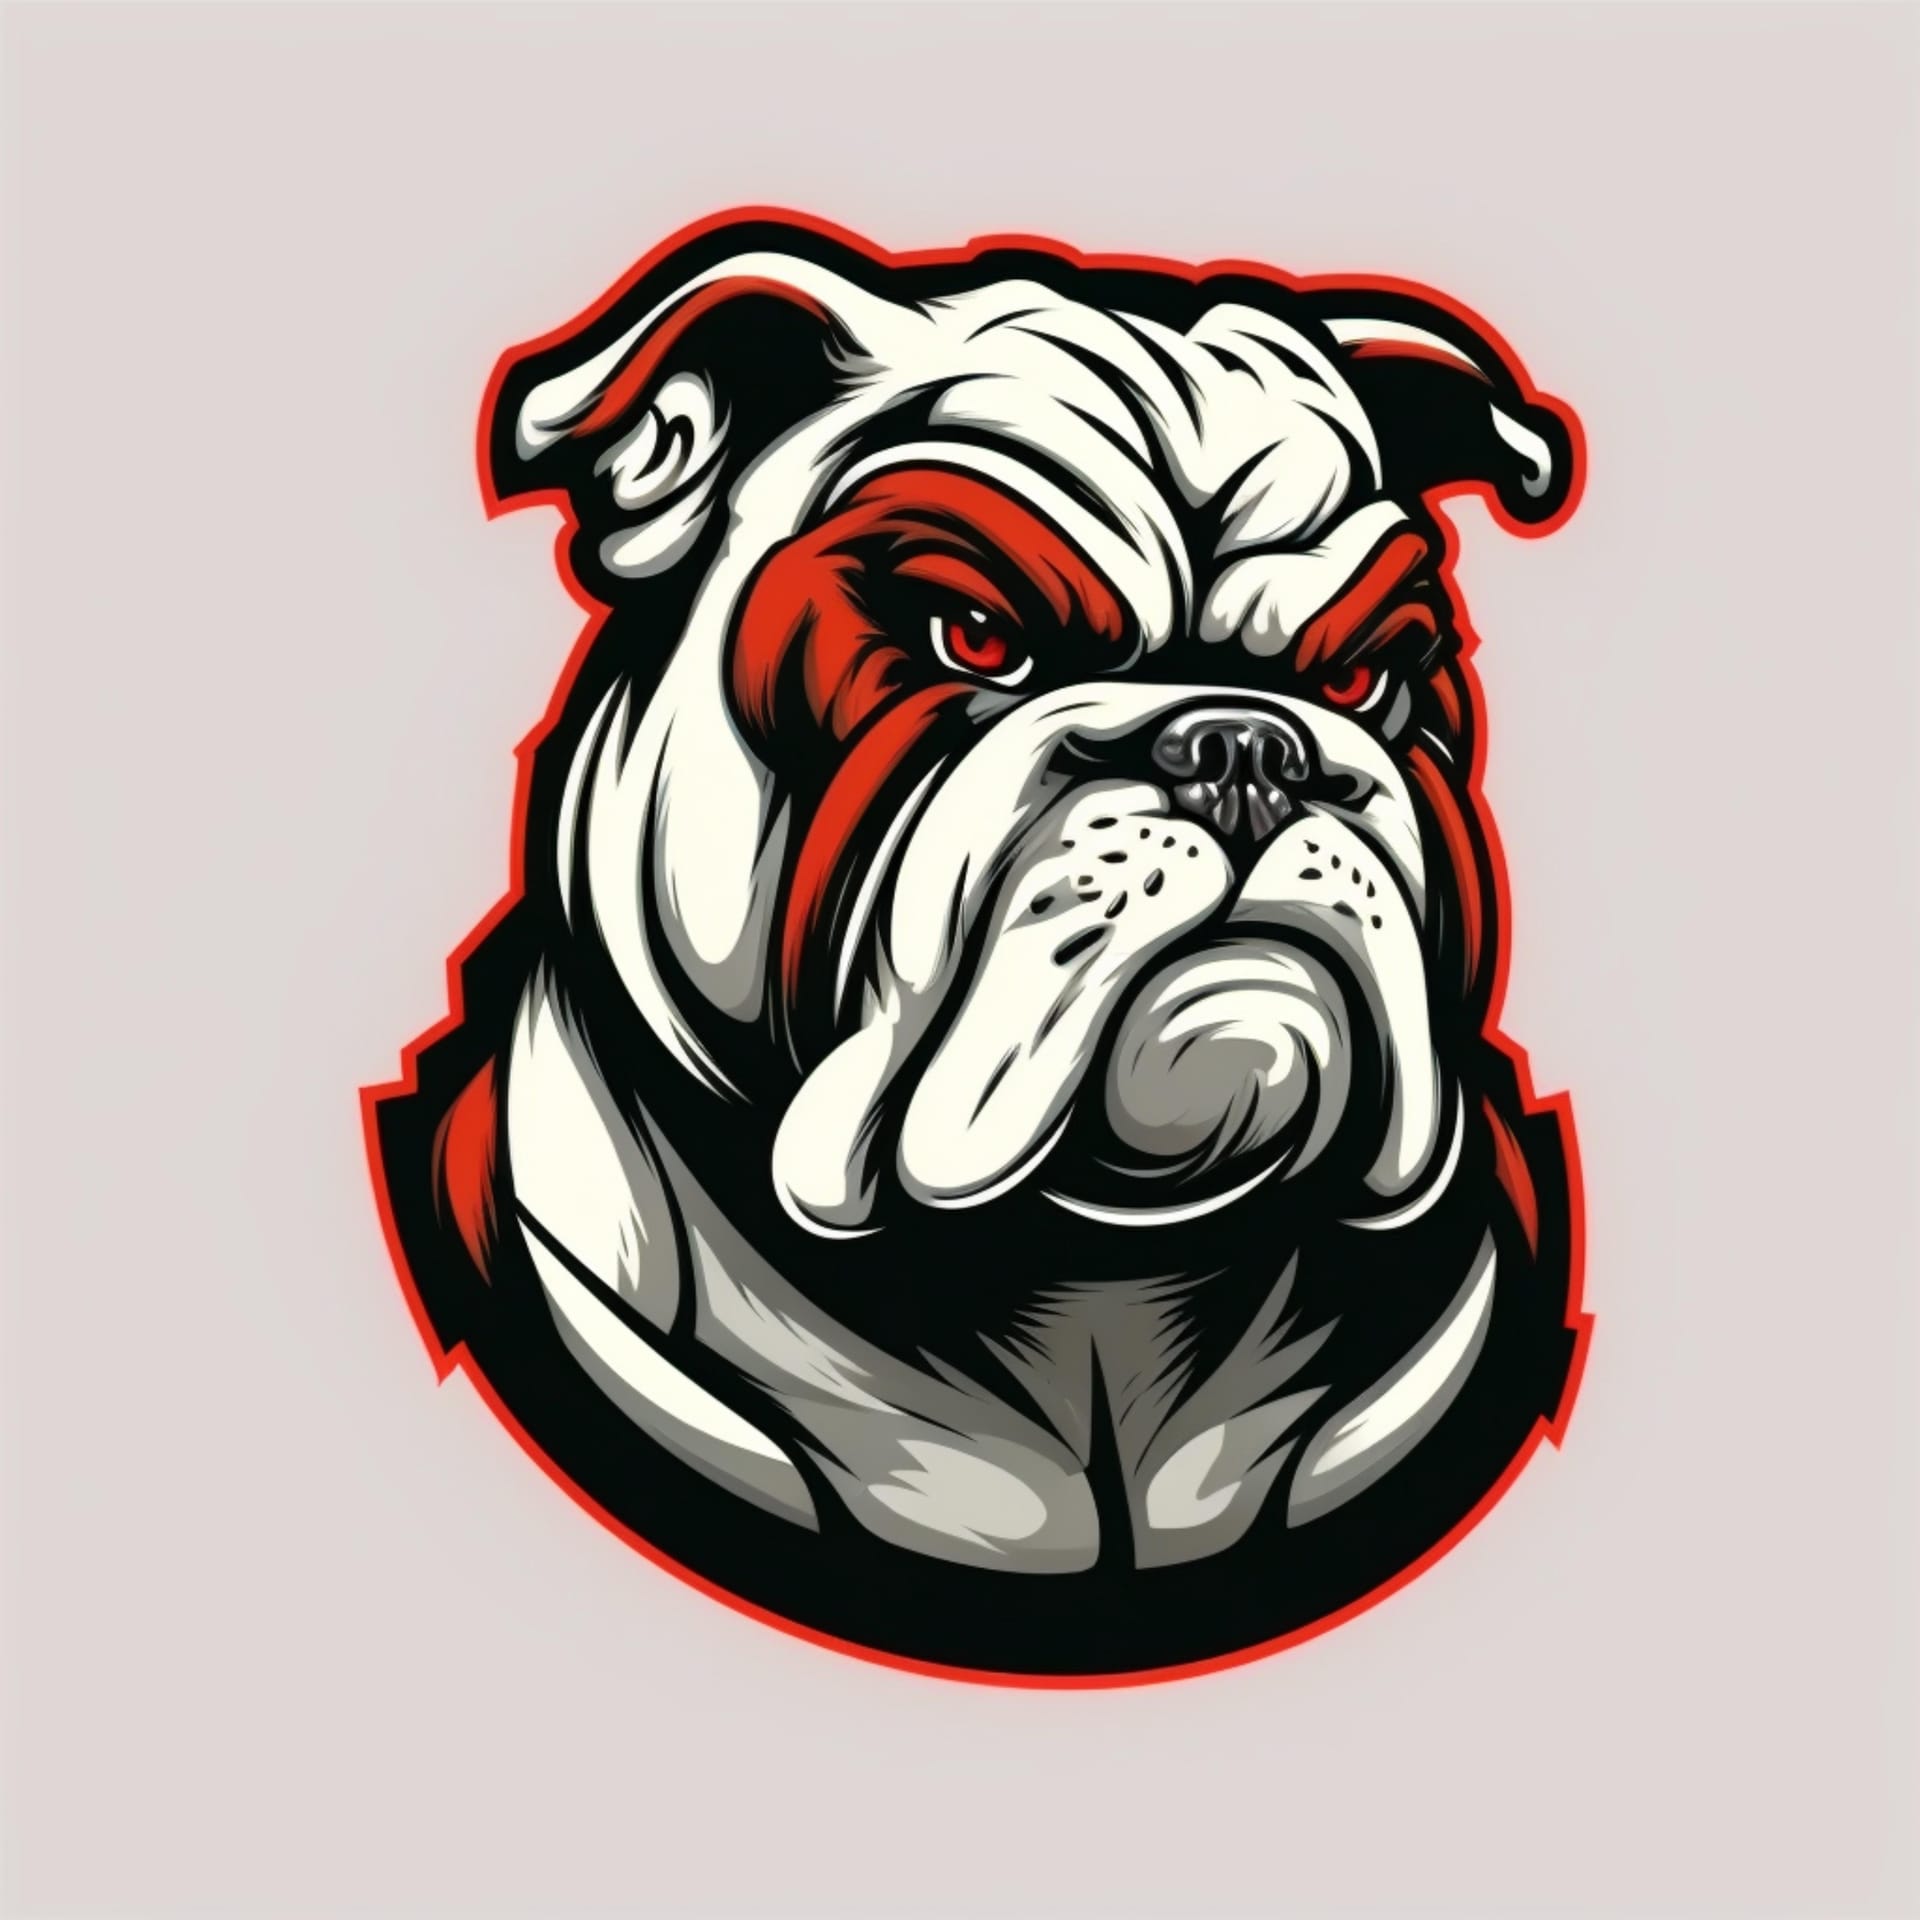 Bulldog logo illustration nice picture